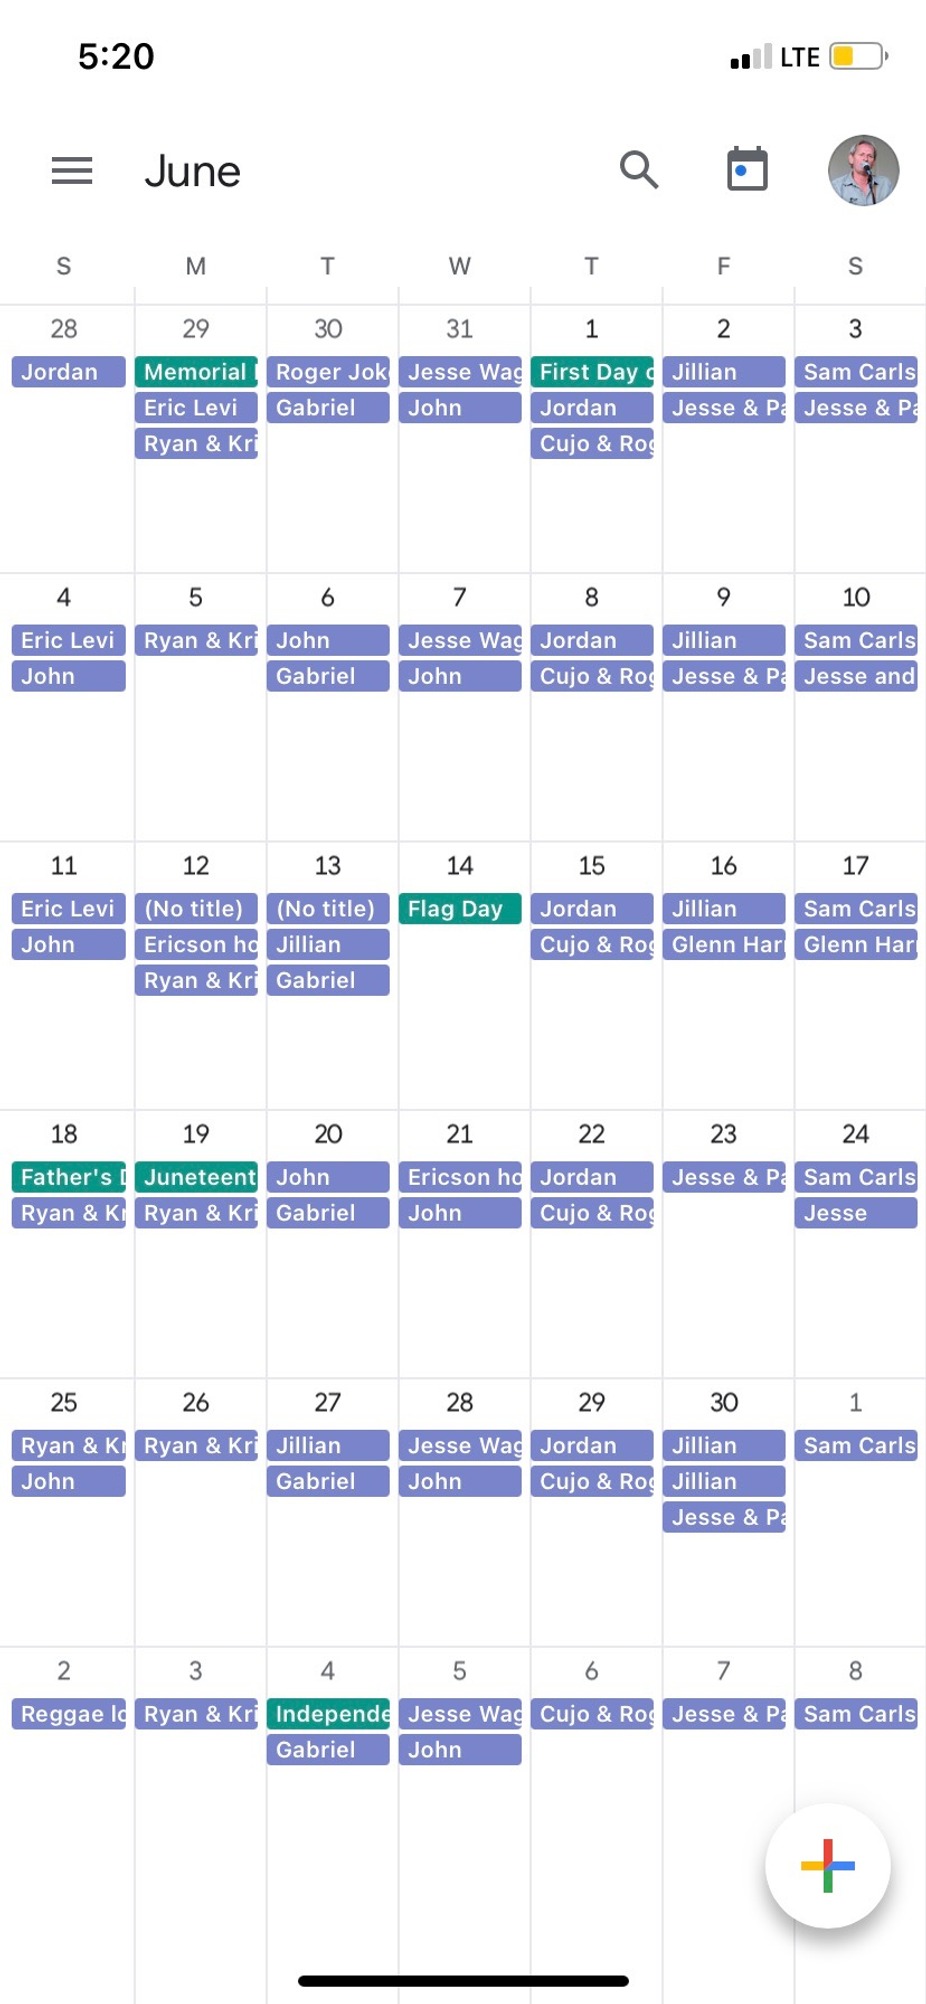 June Music Schedule event photo